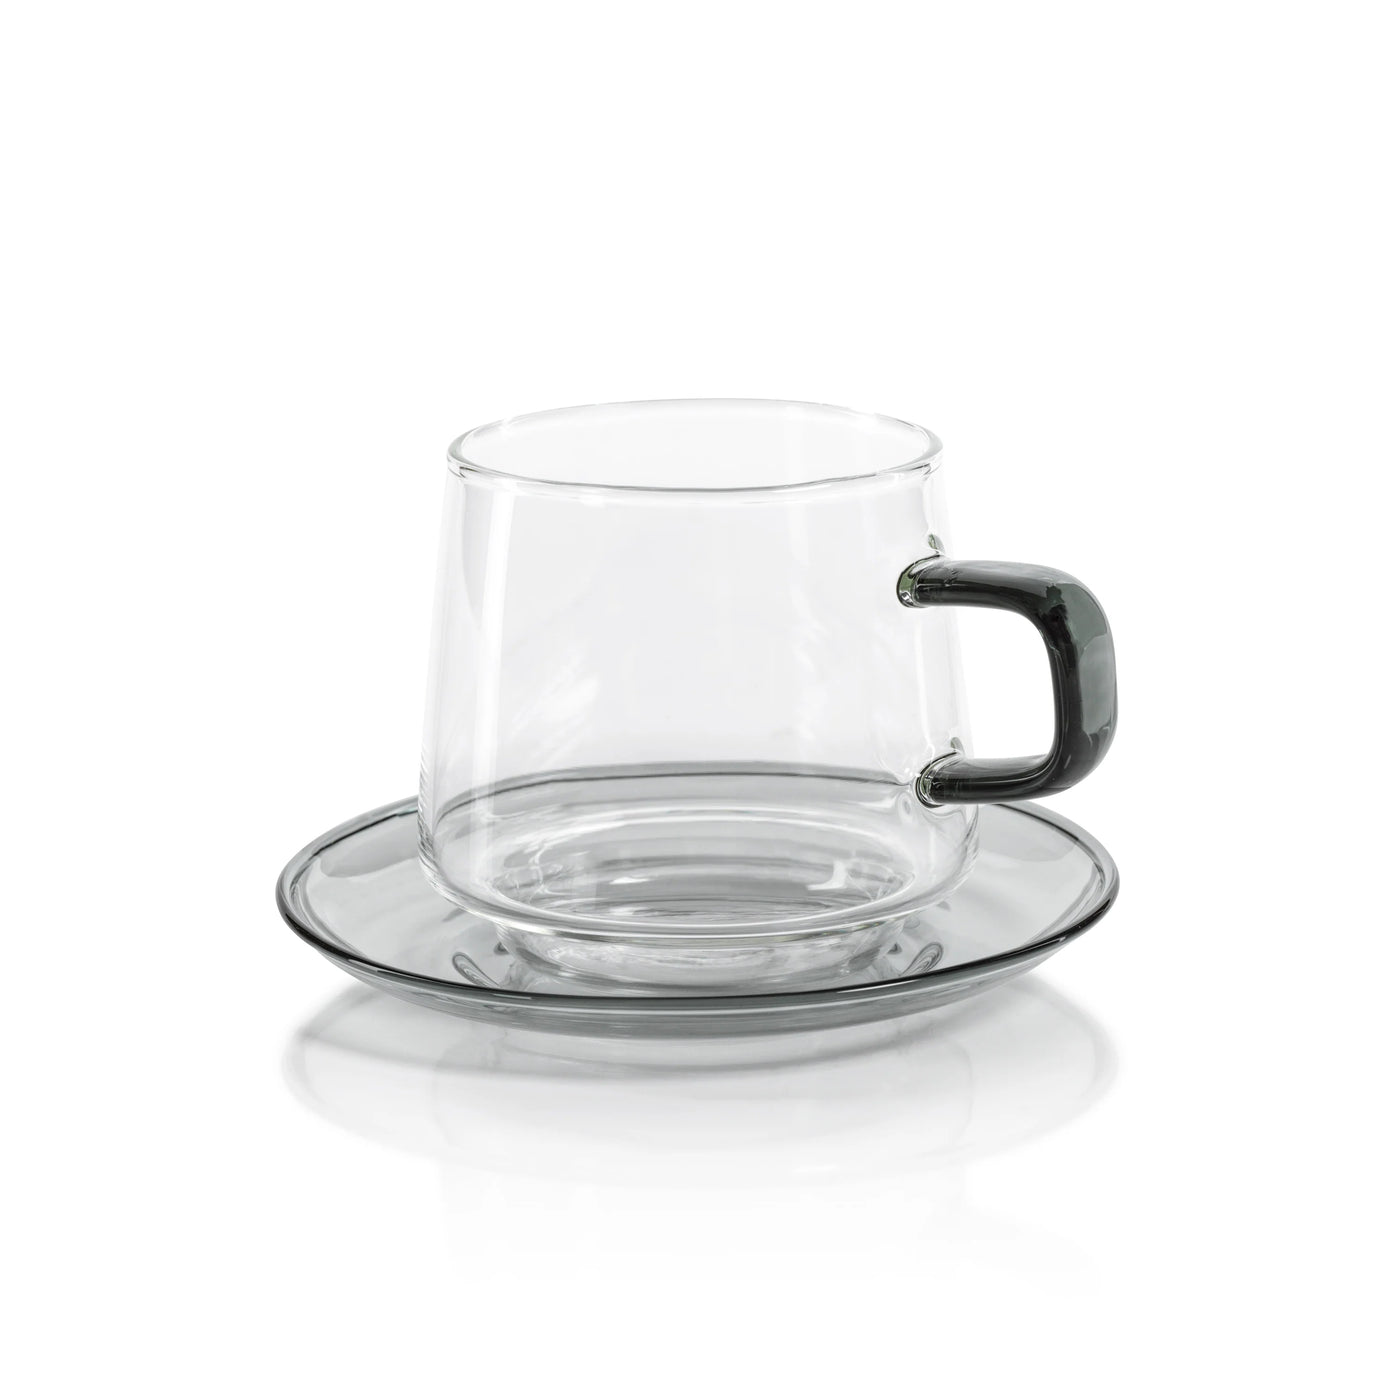 CUP GLASS TEA&COFFEE WITH SAUCER SET GRAY